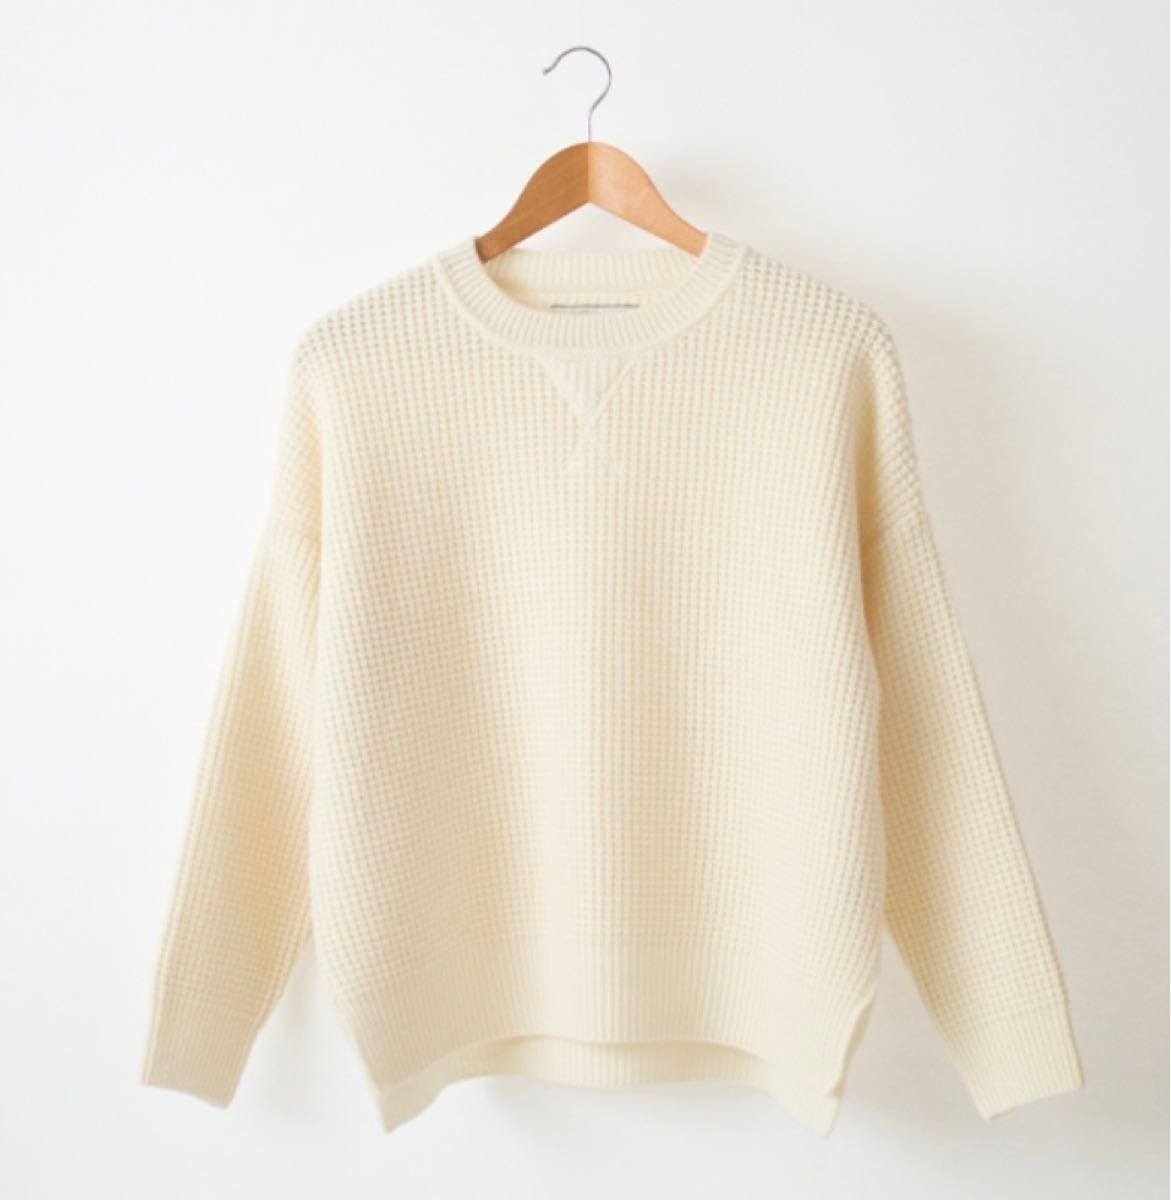 ZUTTO ワッフル編みセーター 新品未使用 タグ付き 美品